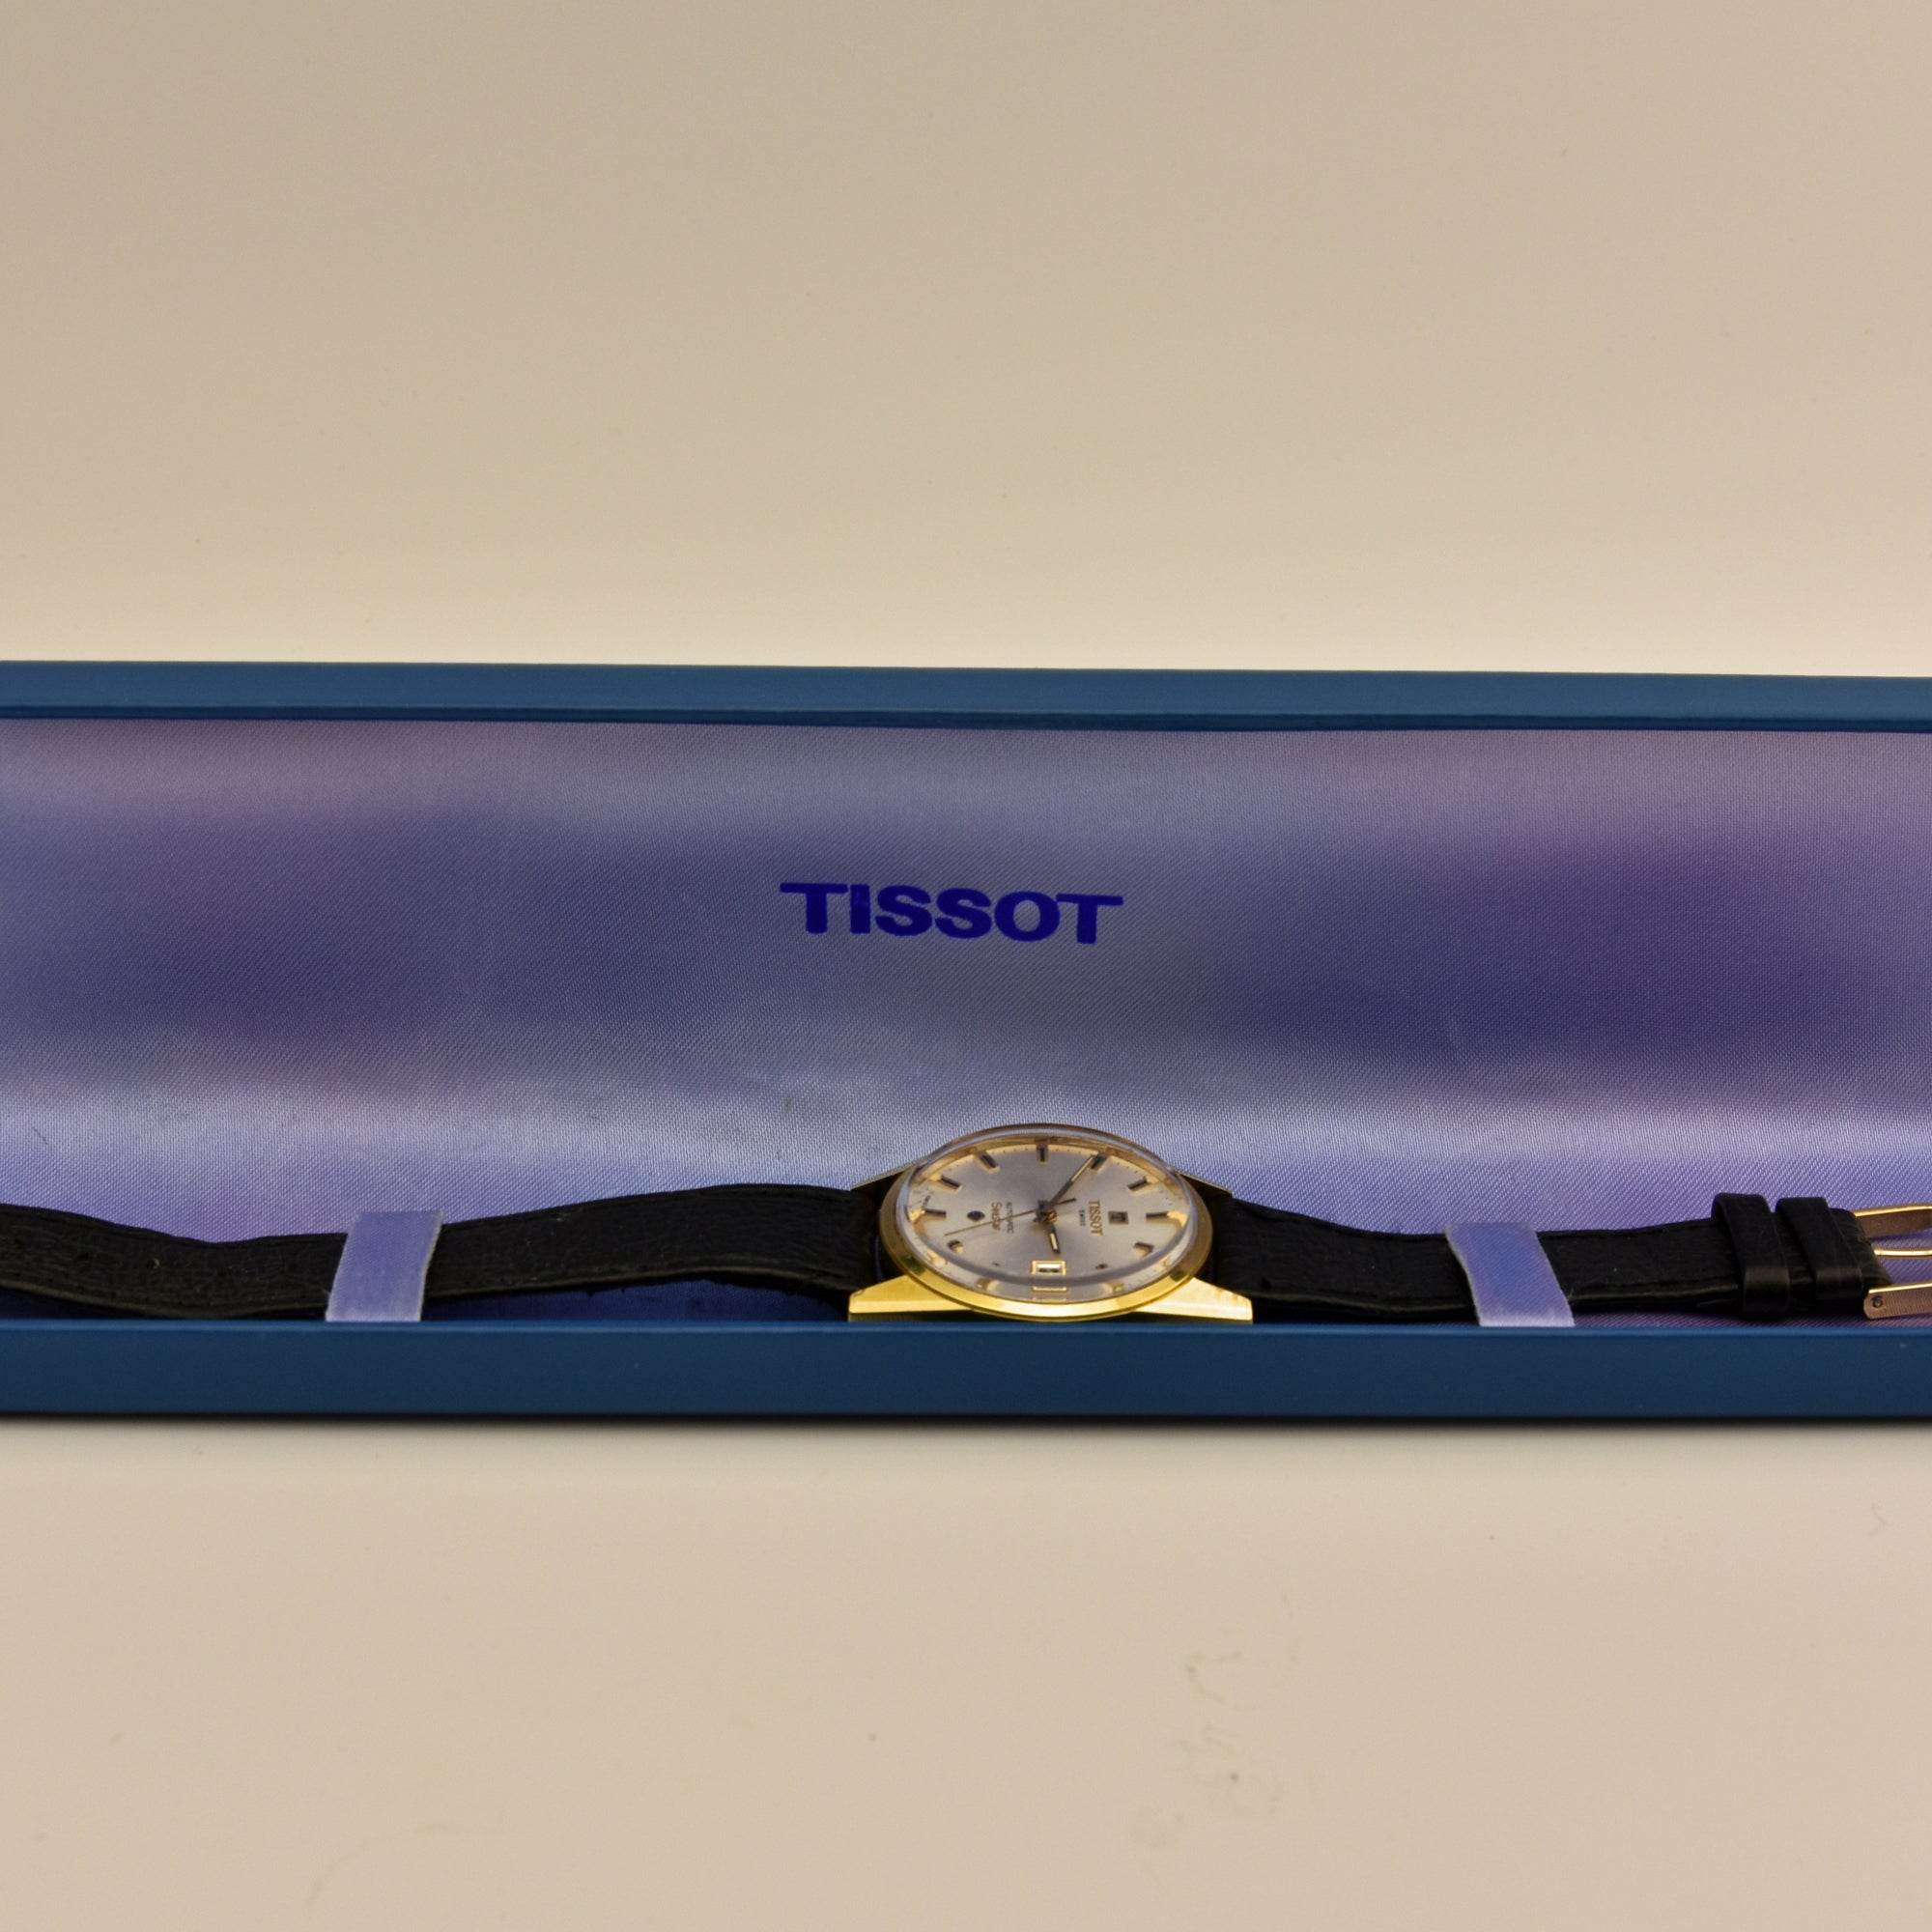 Tissot Seastar Automatic 1960s Wrist Watch with Date & original box